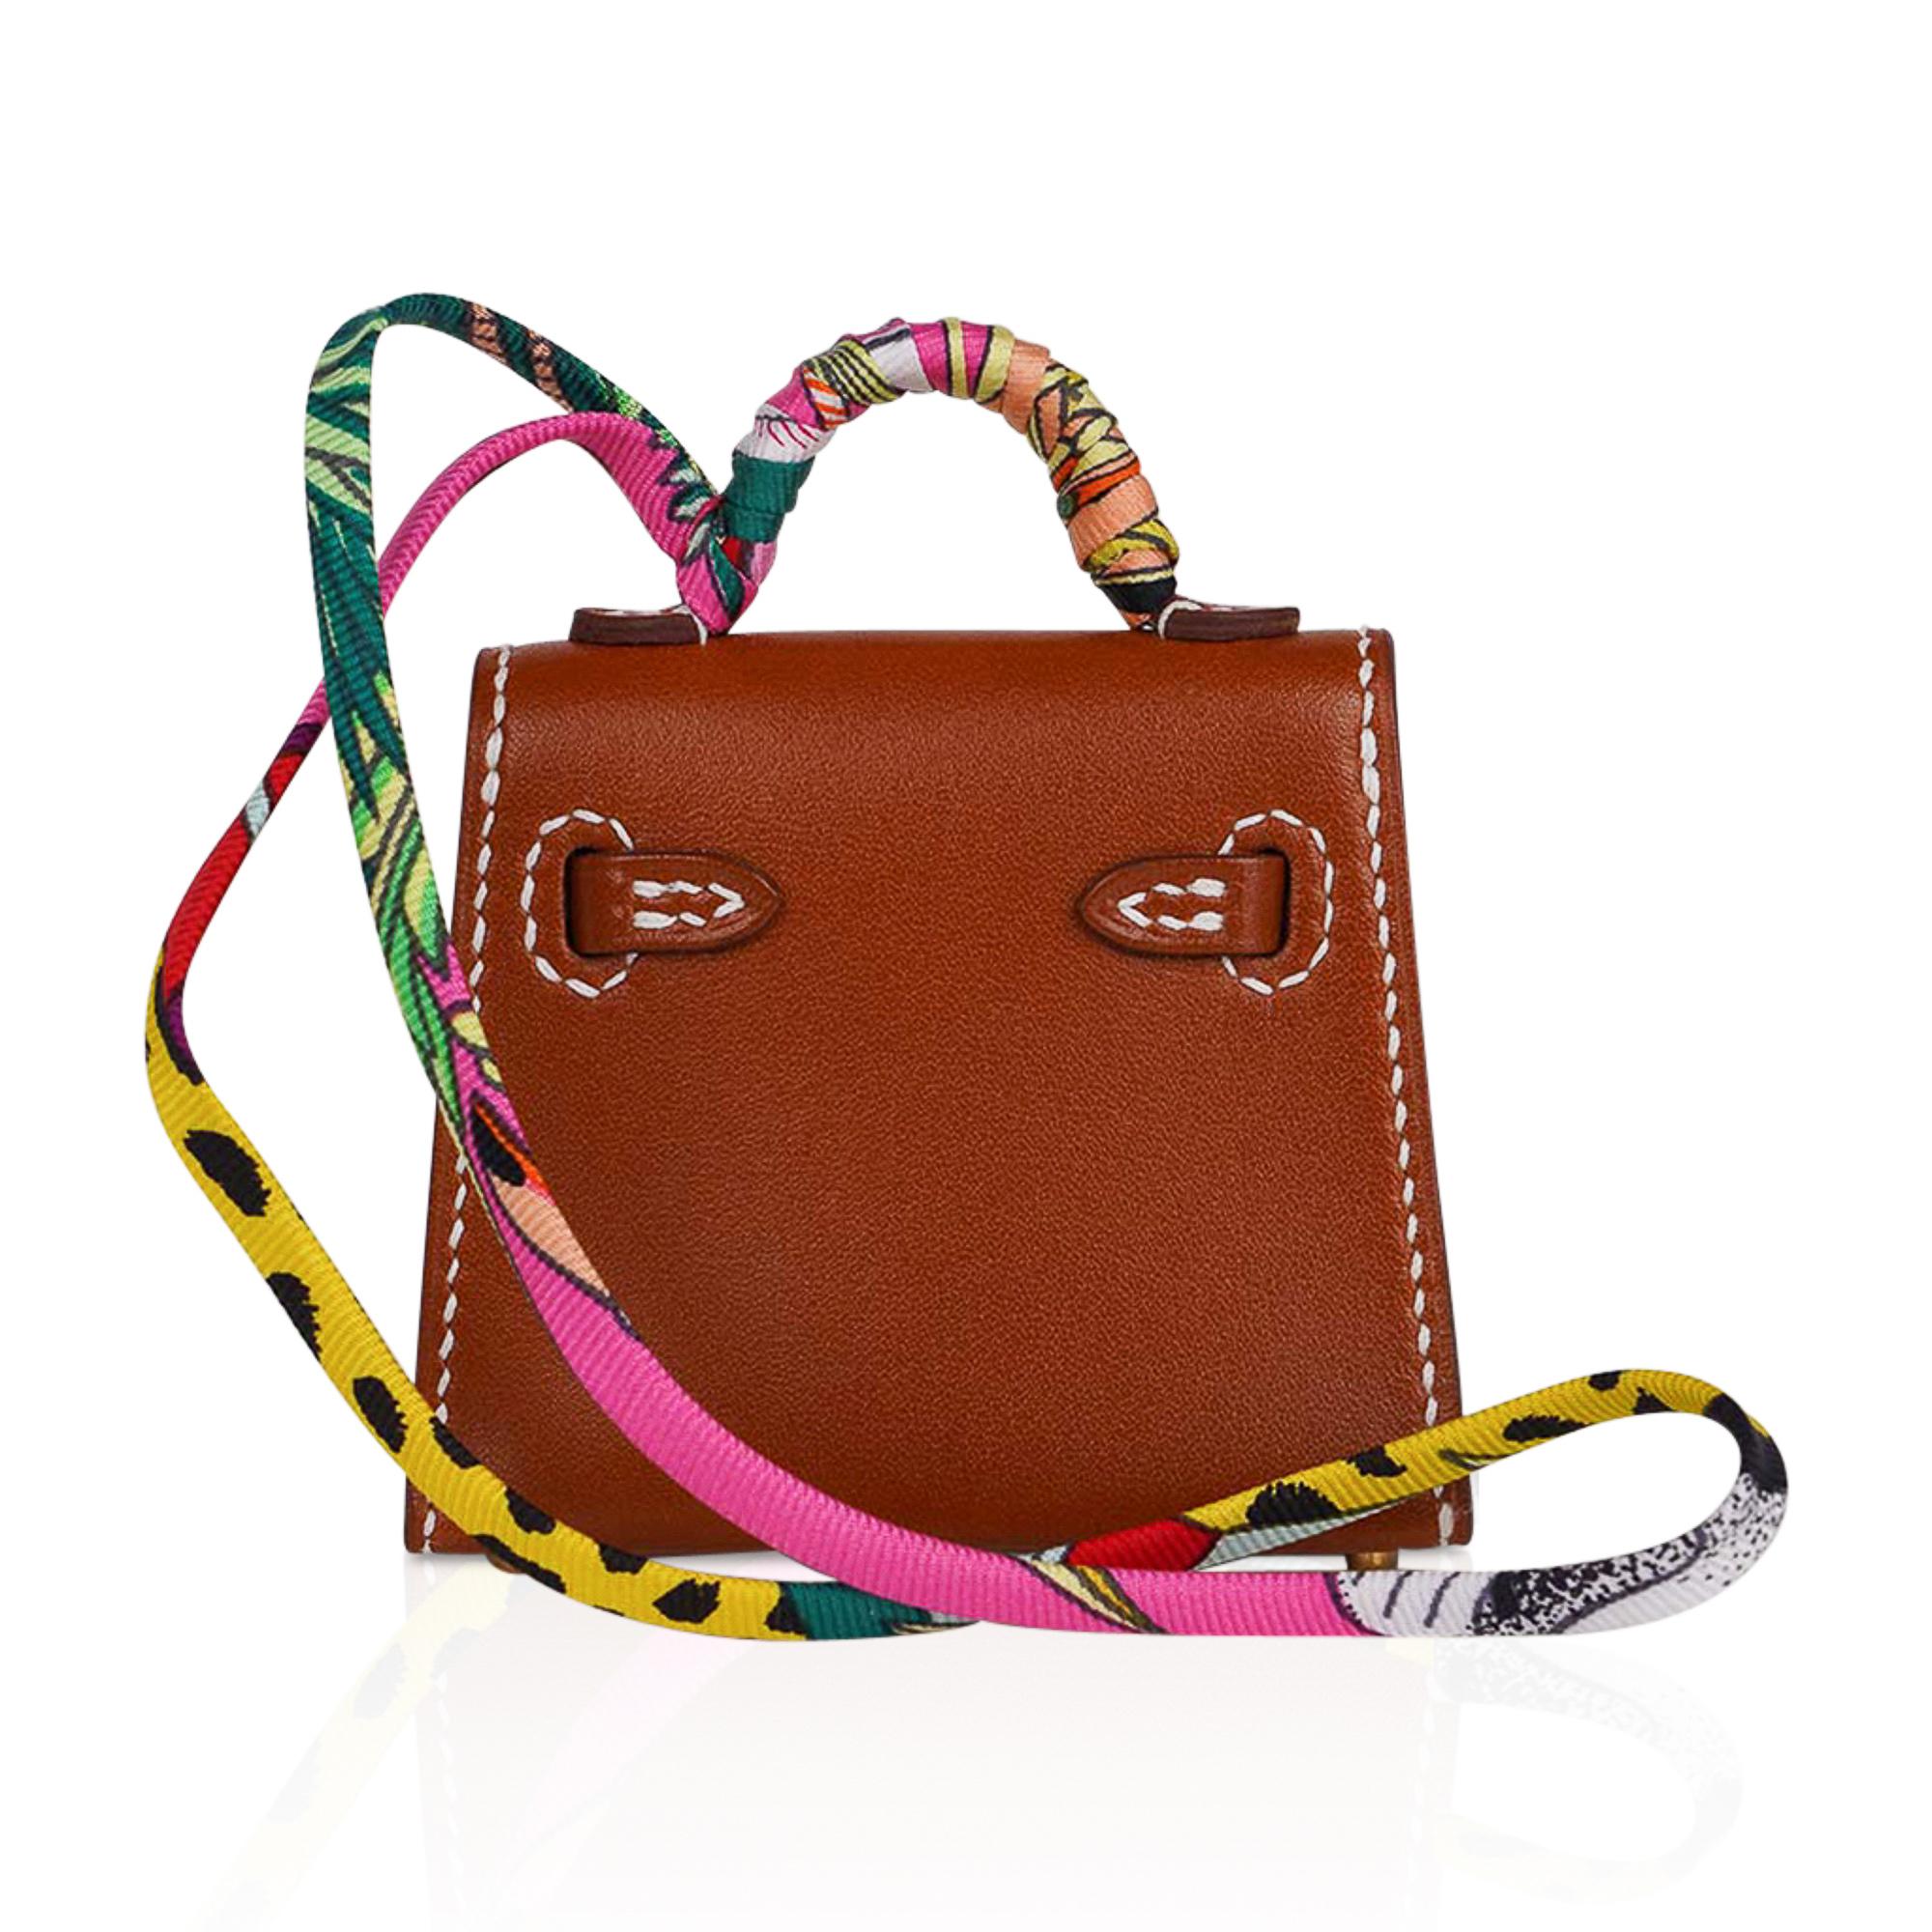 Women's Kelly Twilly Bag Charm Gold Tadelakt Gold Hardware New w/Box